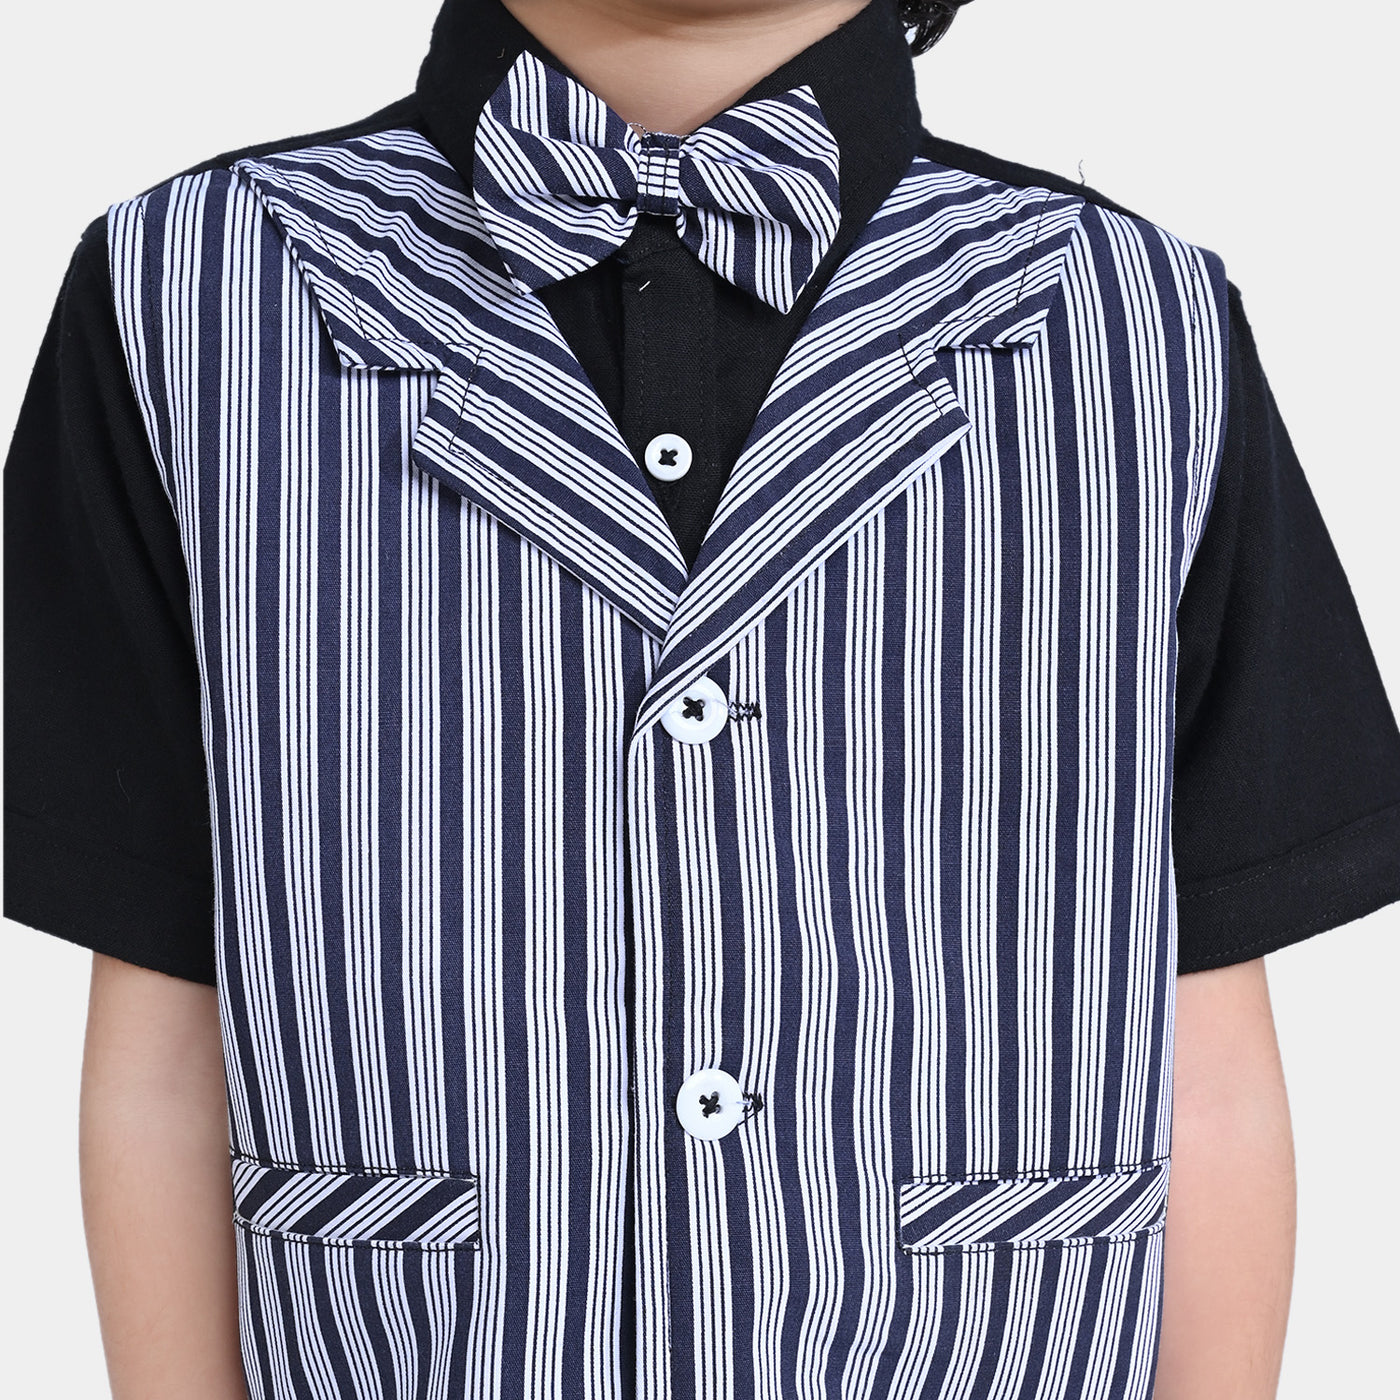 Boys 2PC Suit B&W Stripes-BLACK